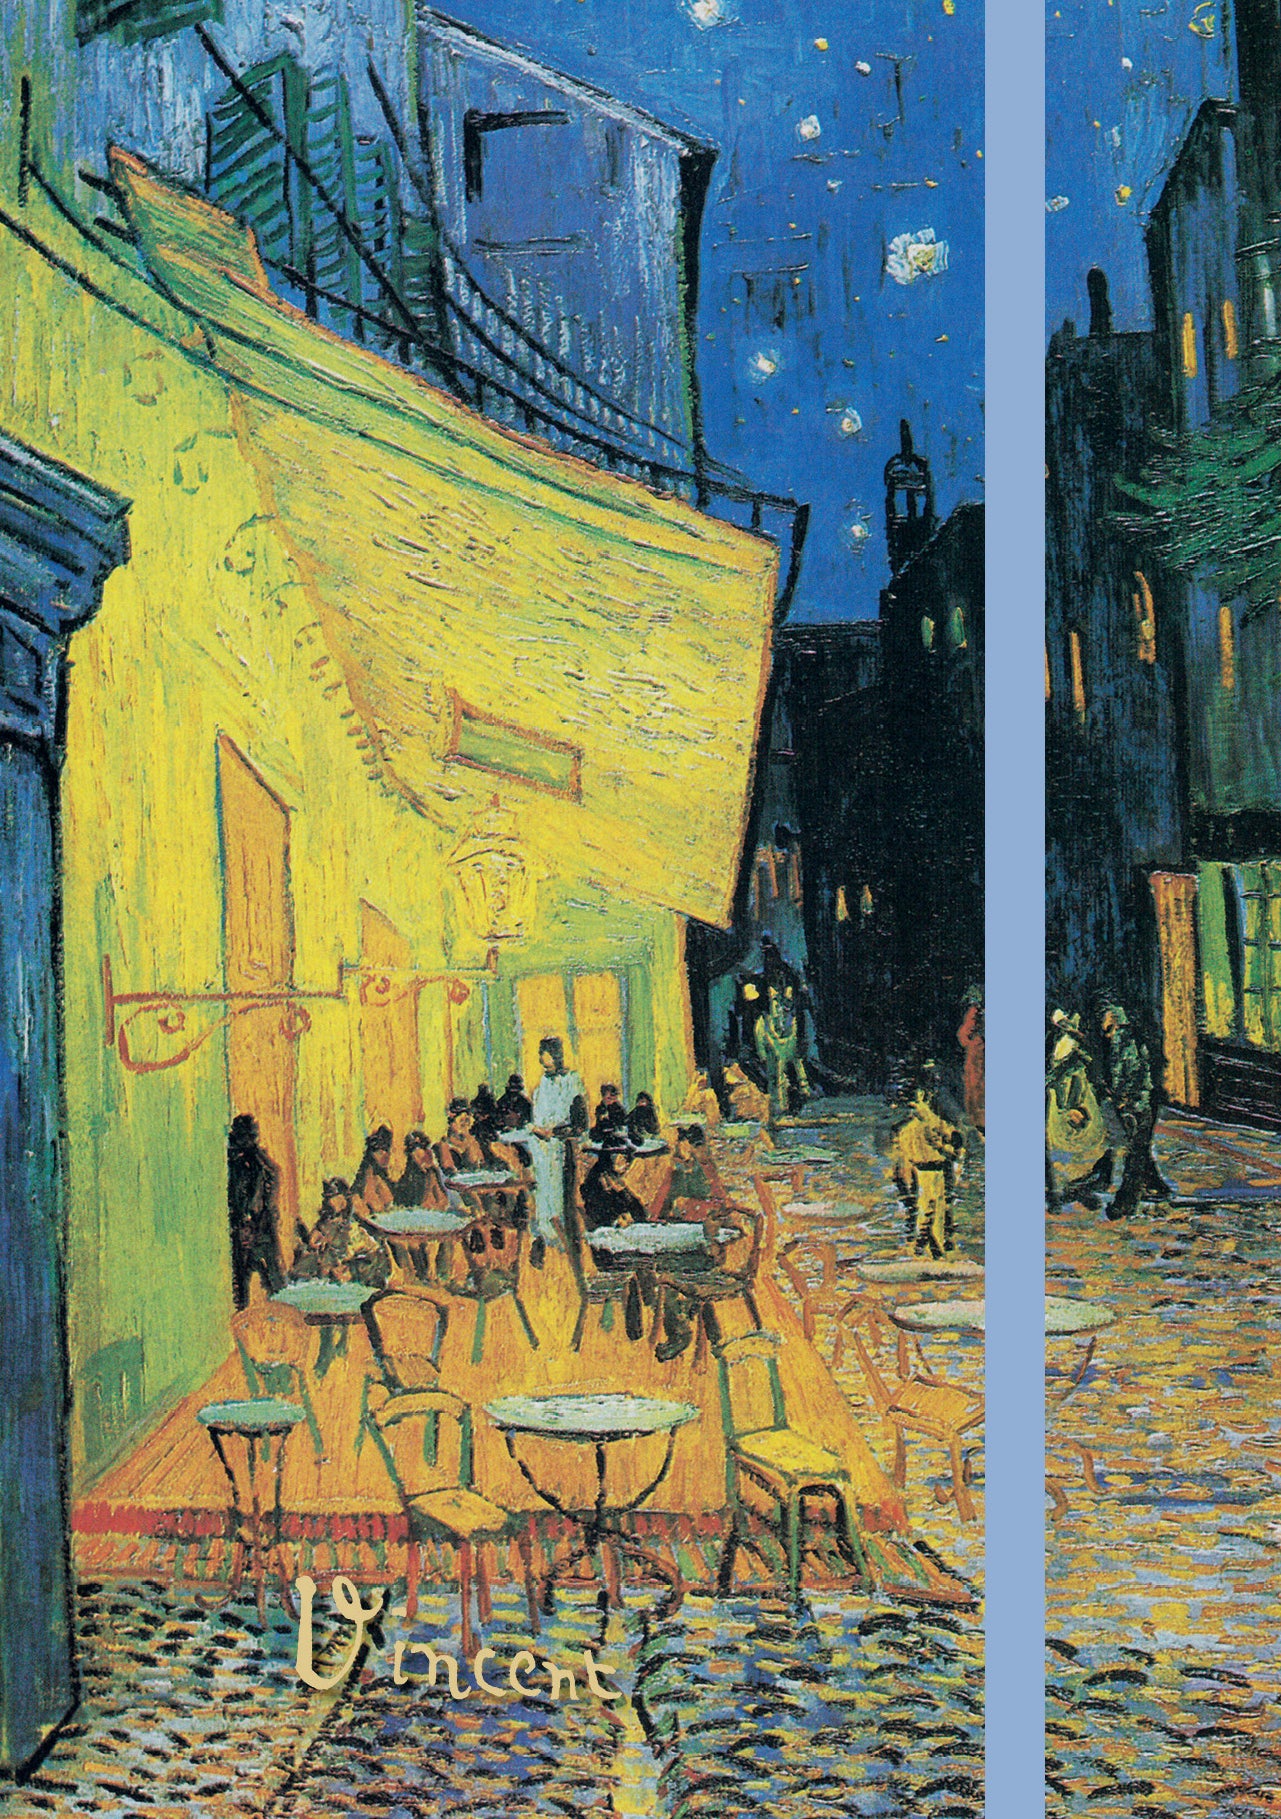 A6 Notebook - Van Gogh - Starry Night